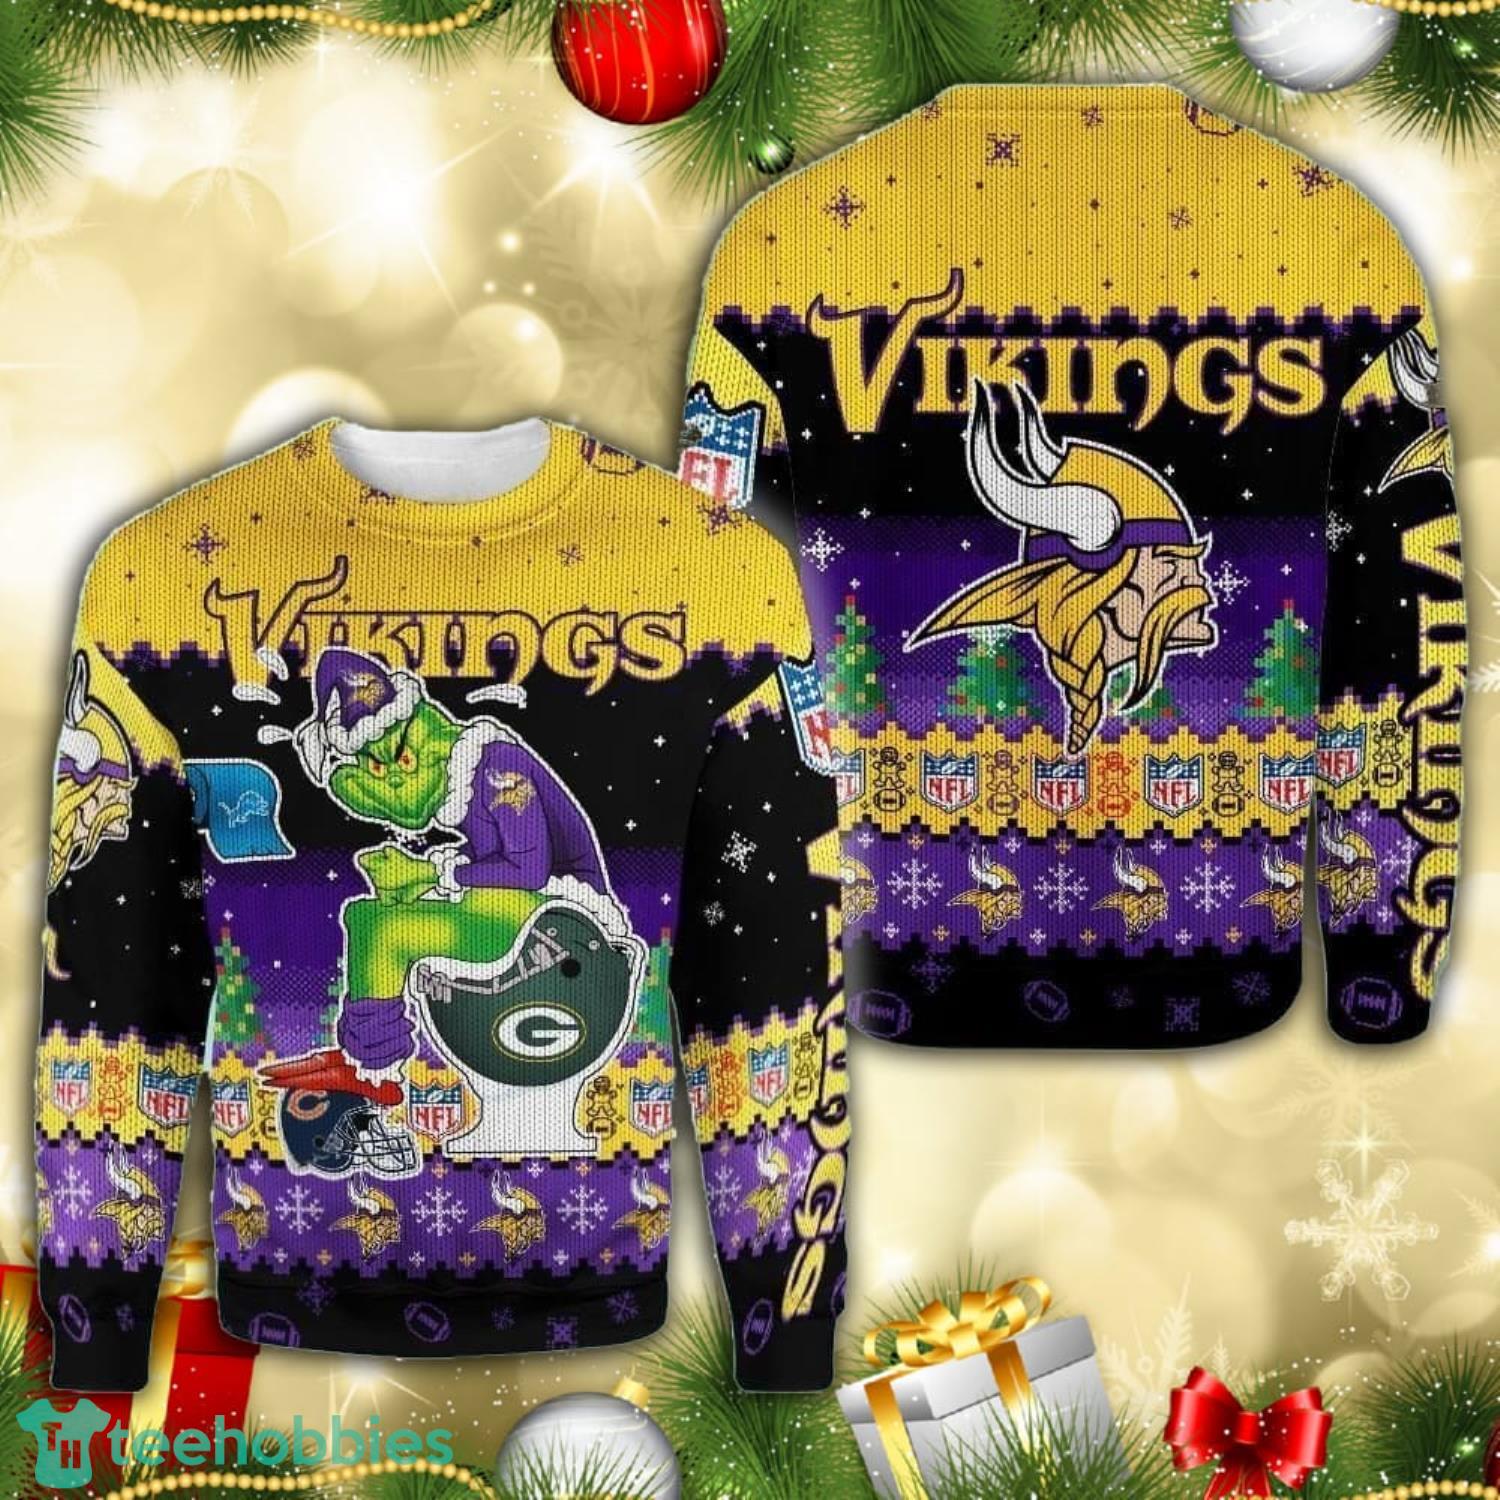 NFL Minnesota Vikings Custom Name And Number Cute Ugly Christmas Sweater  Christmas Gift - Banantees